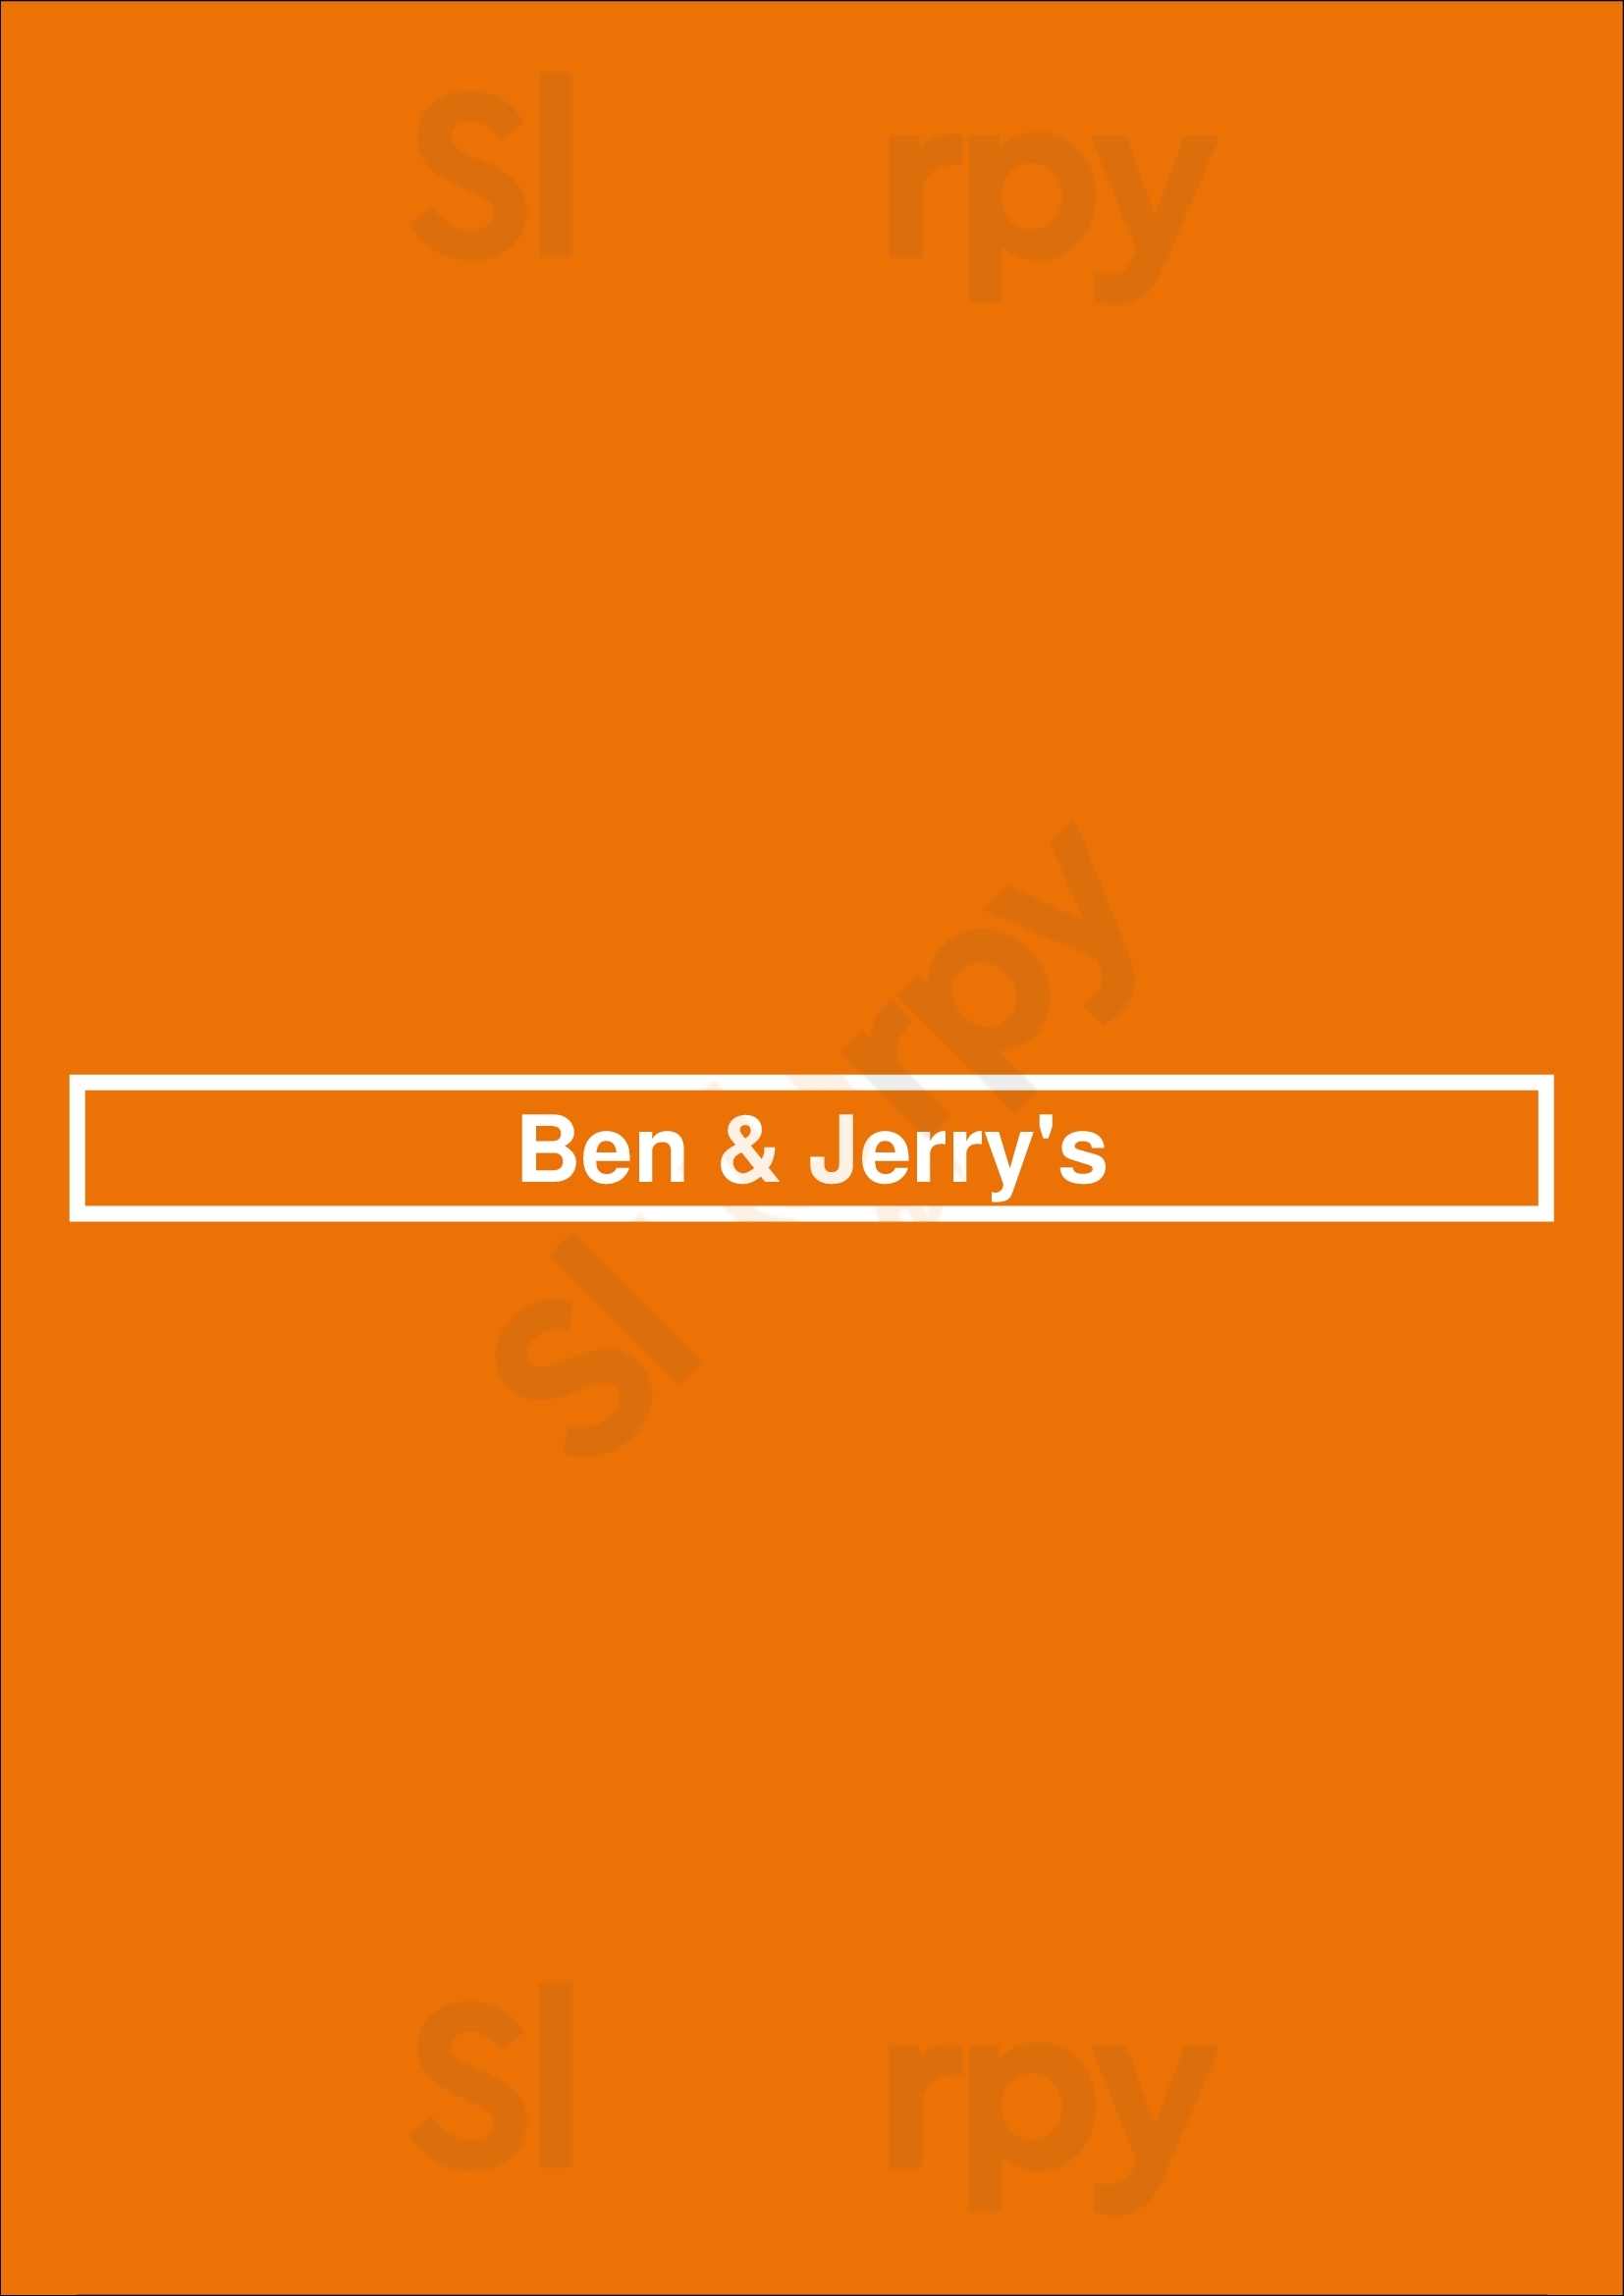 Ben & Jerry's Los Angeles Menu - 1